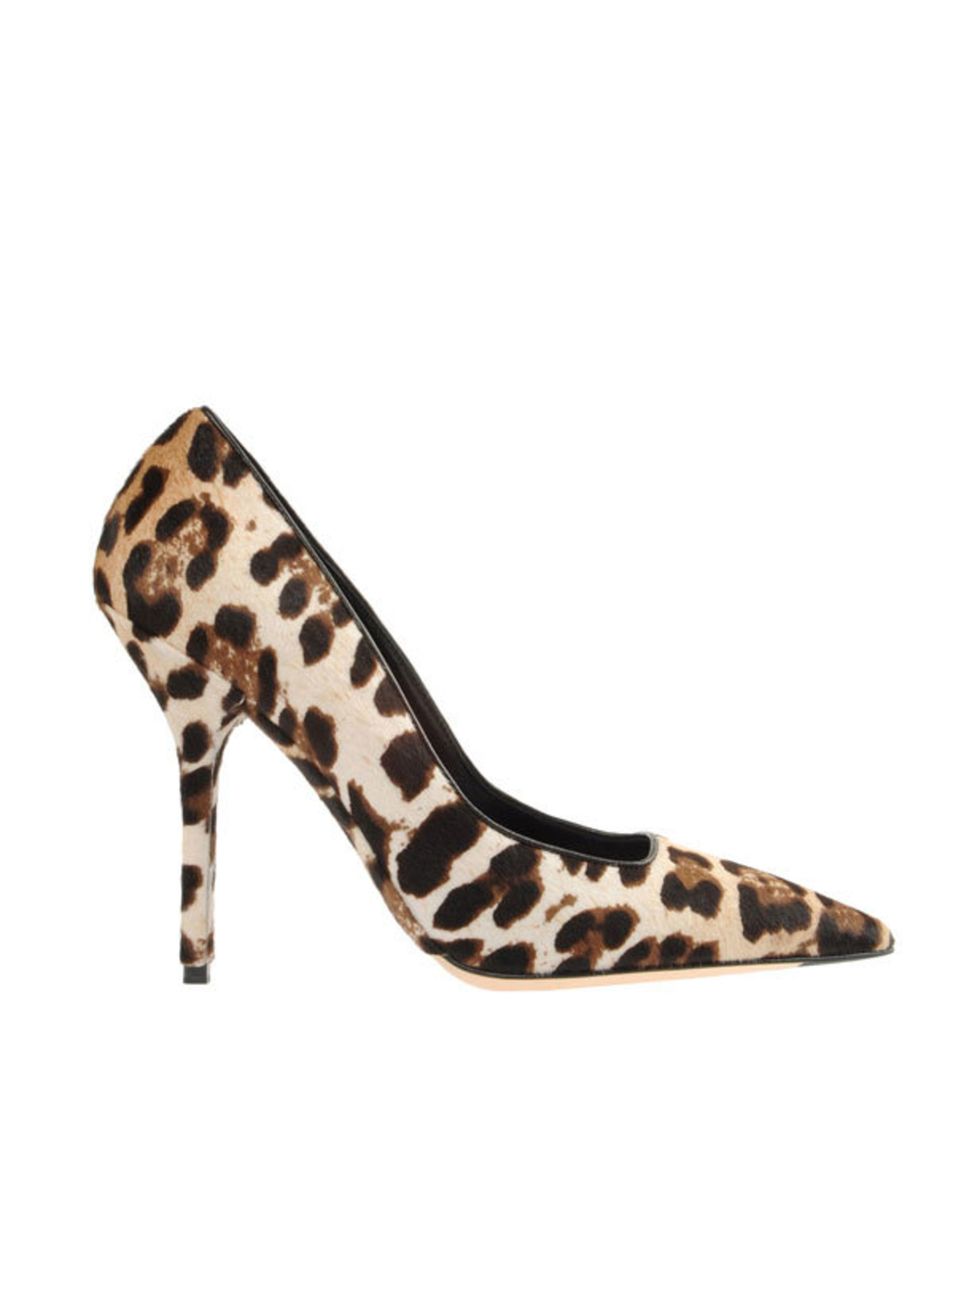 <p>Dolce &amp; Gabbana leopard print heels, £410, at <a href="http://www.thecorner.com/item/YOOX/DOLCE+%26+GABBANA/dept/tcwoman/tskay/582B0E9B/rr/1/cod10/44348629NH/sts/sr_tcwoman3">thecorner.com</a></p>